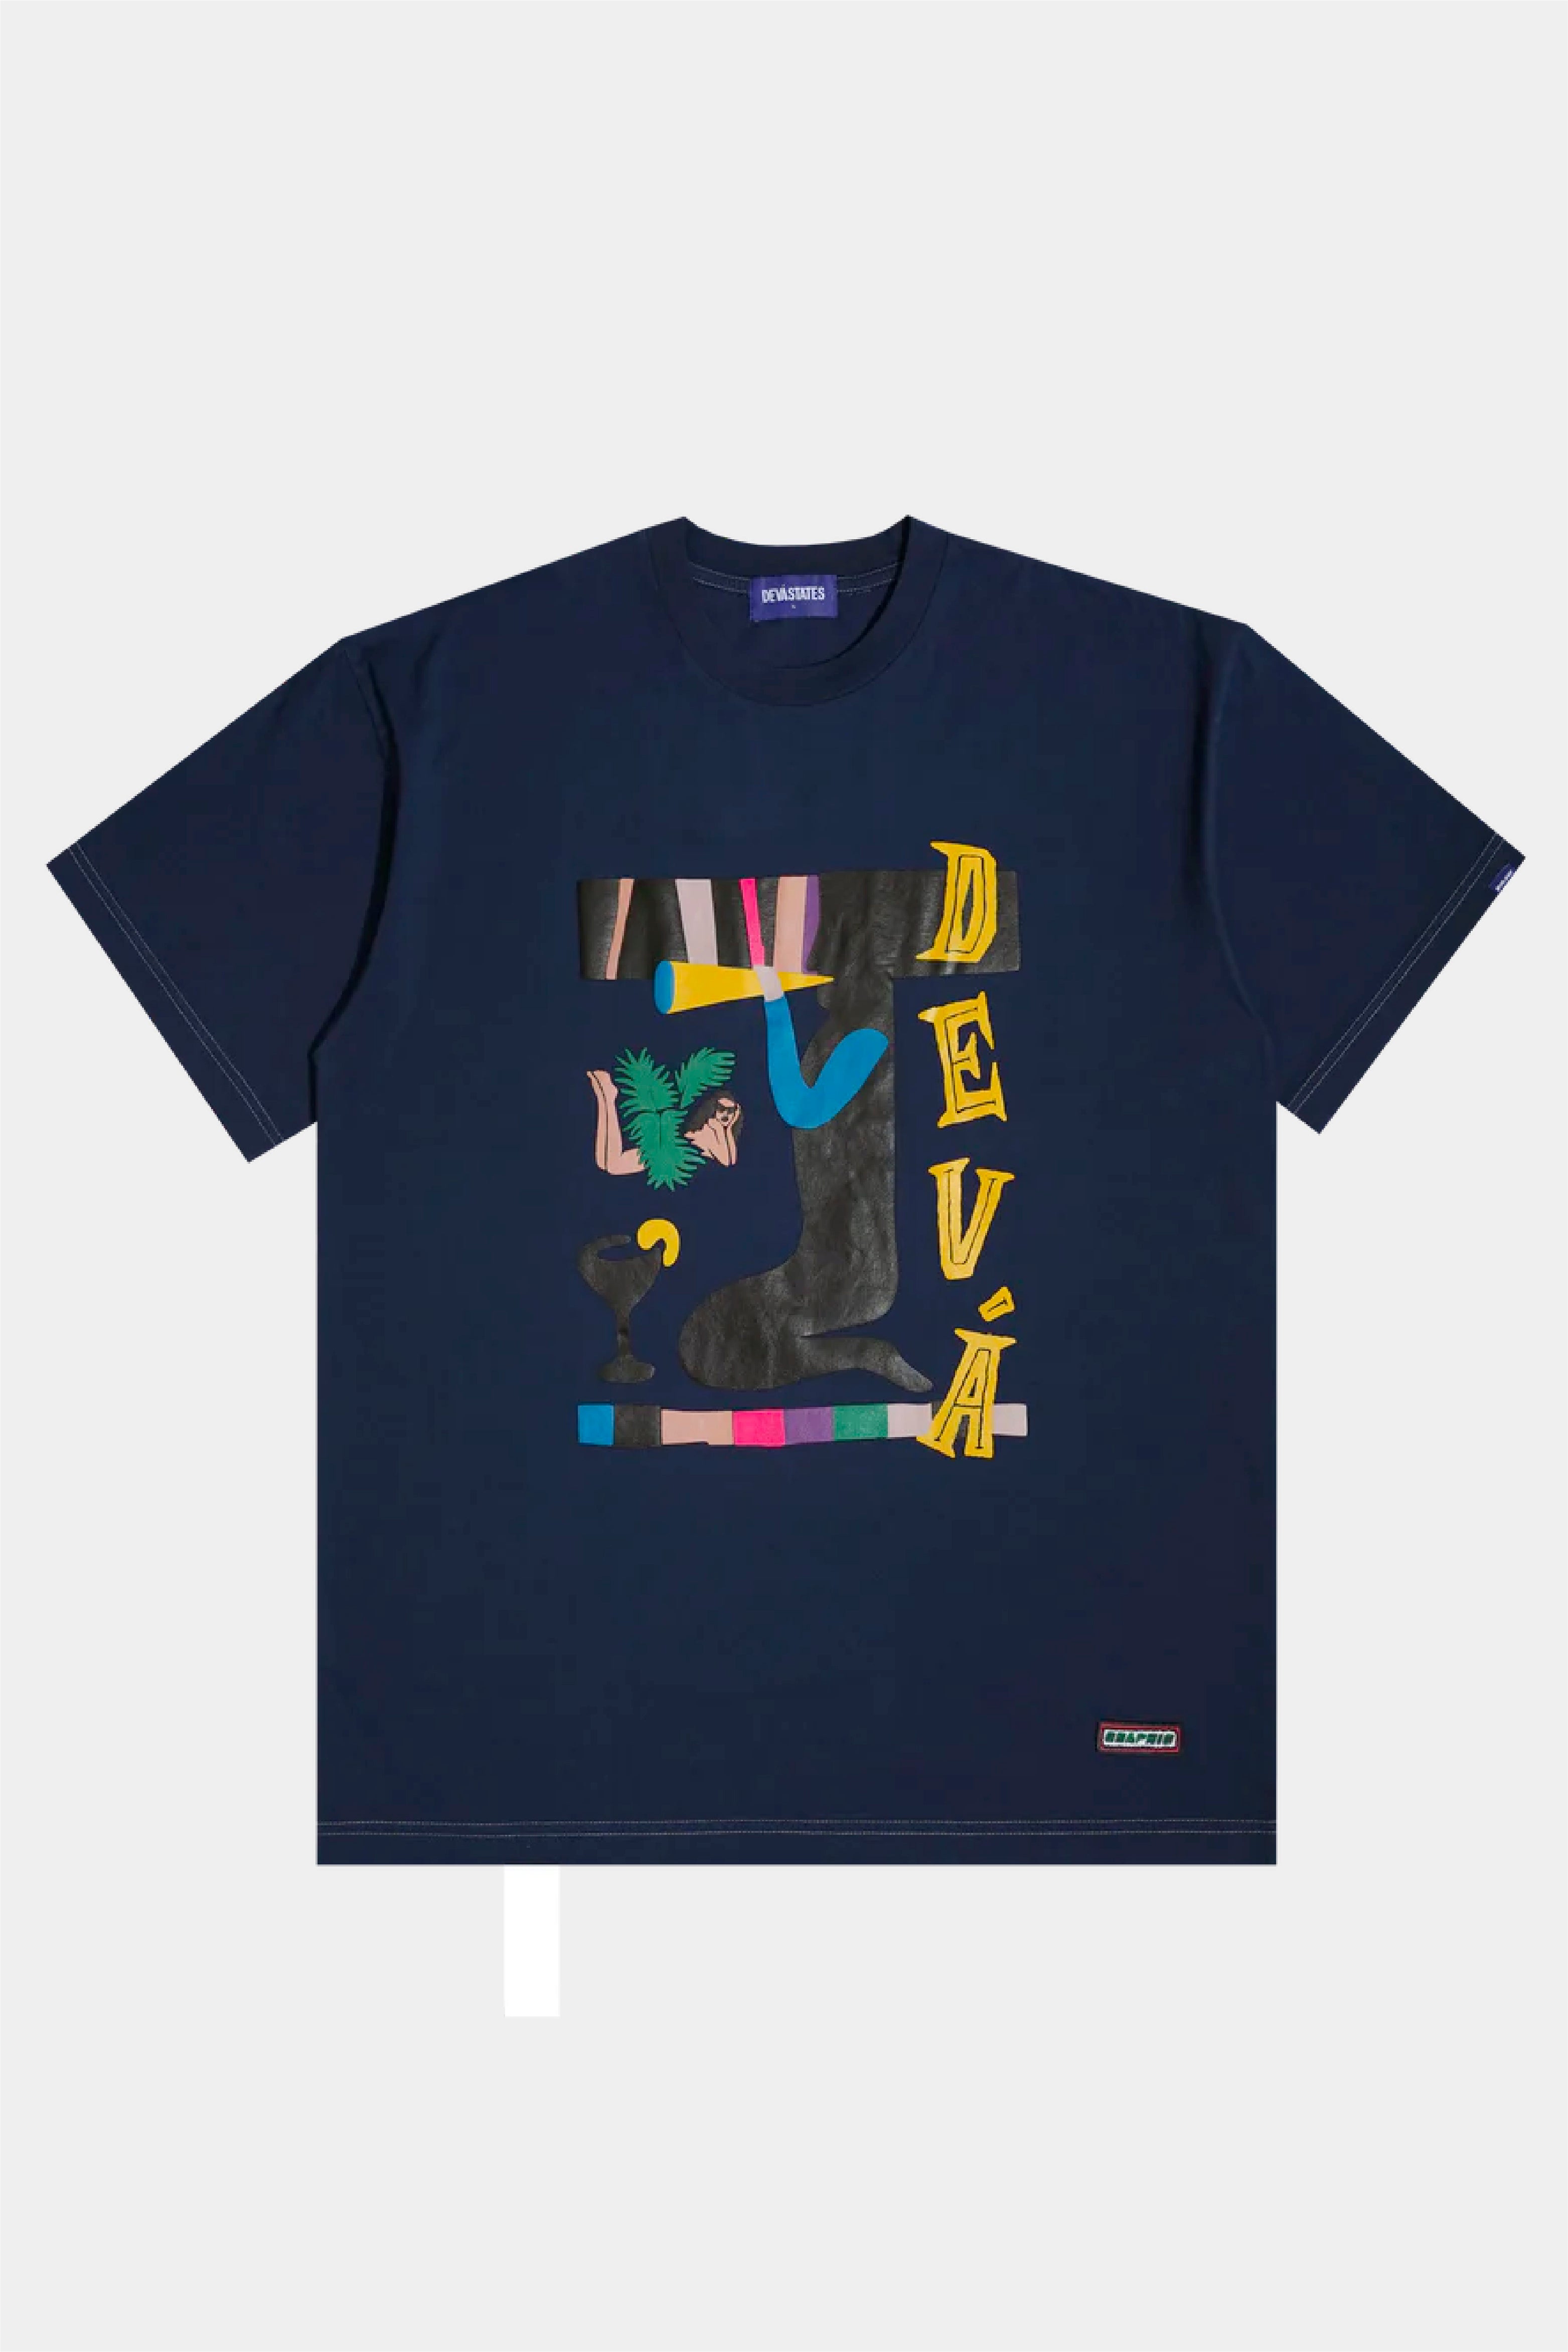 Selectshop FRAME - DEVA STATES Marg Tee T-Shirts Concept Store Dubai